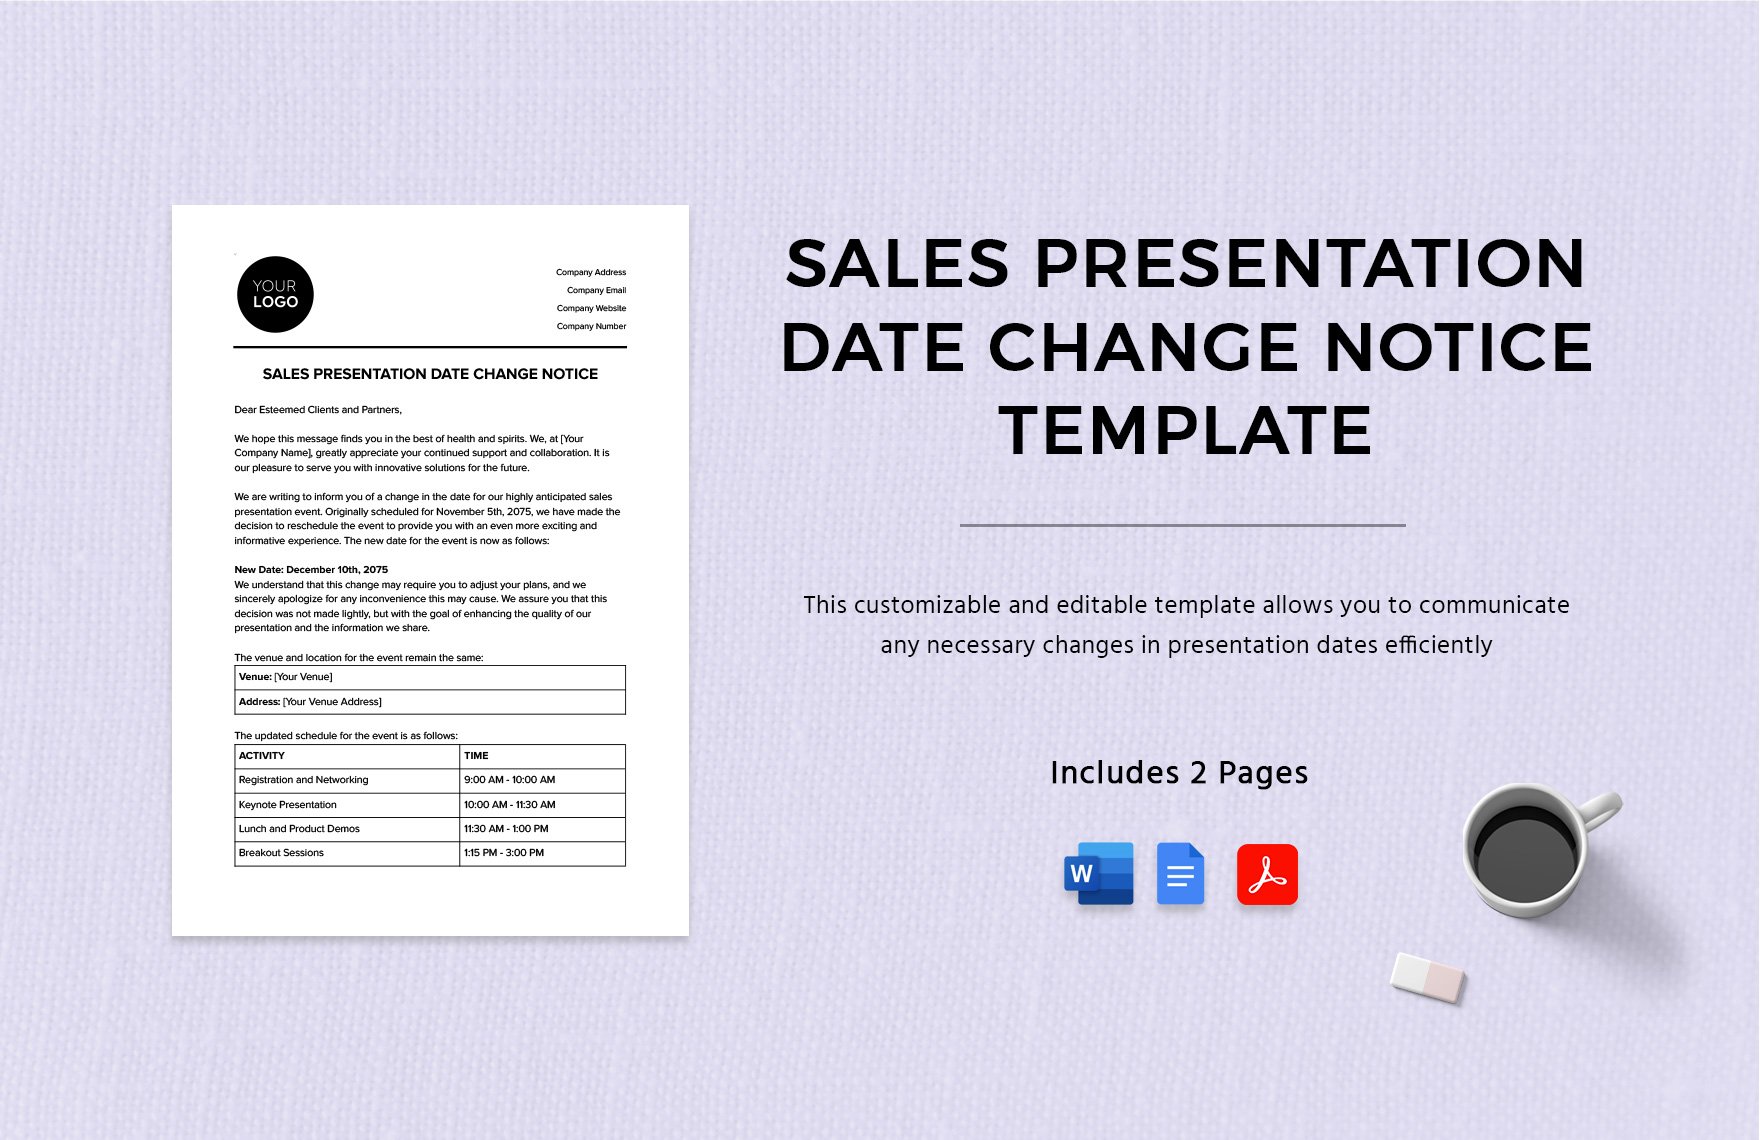 Sales Presentation Date Change Notice Template in Word, Google Docs, PDF